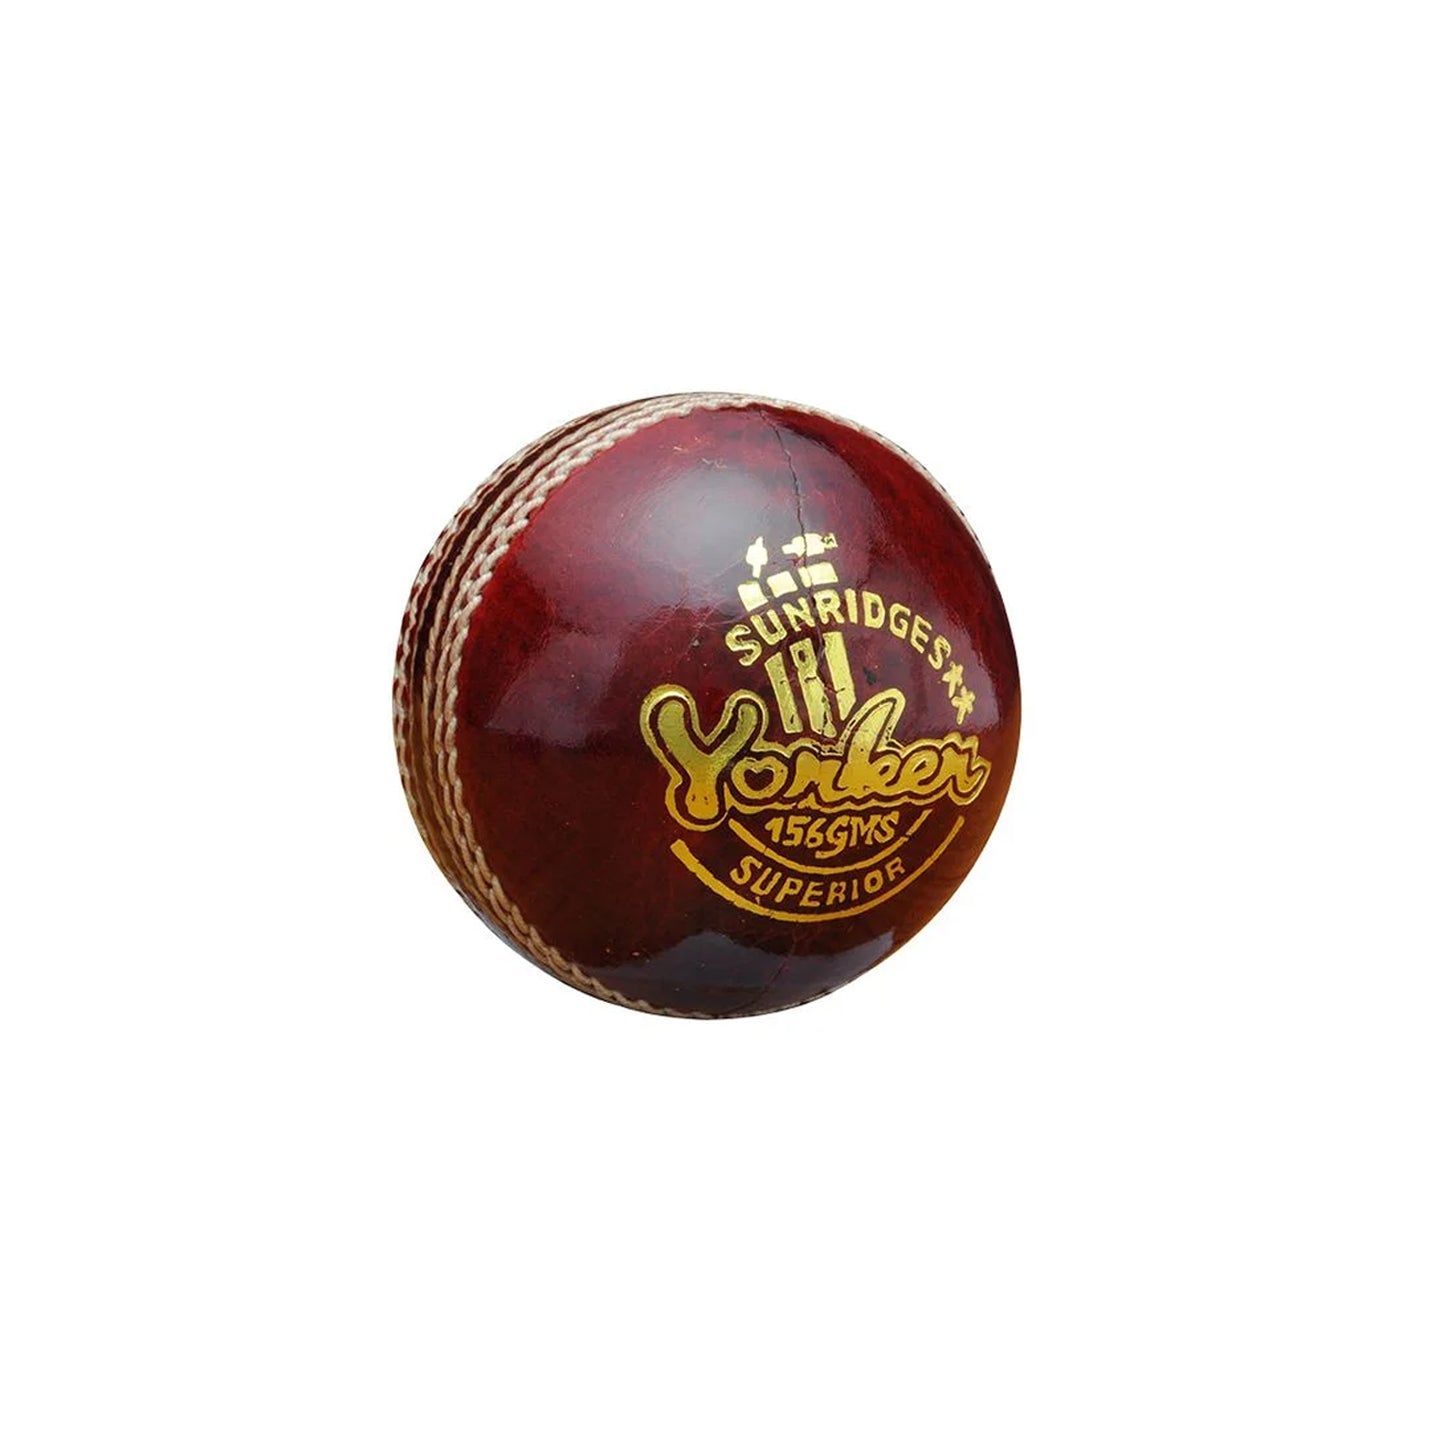 SS Yorker Cricket Ball, Red - 1PC - Best Price online Prokicksports.com